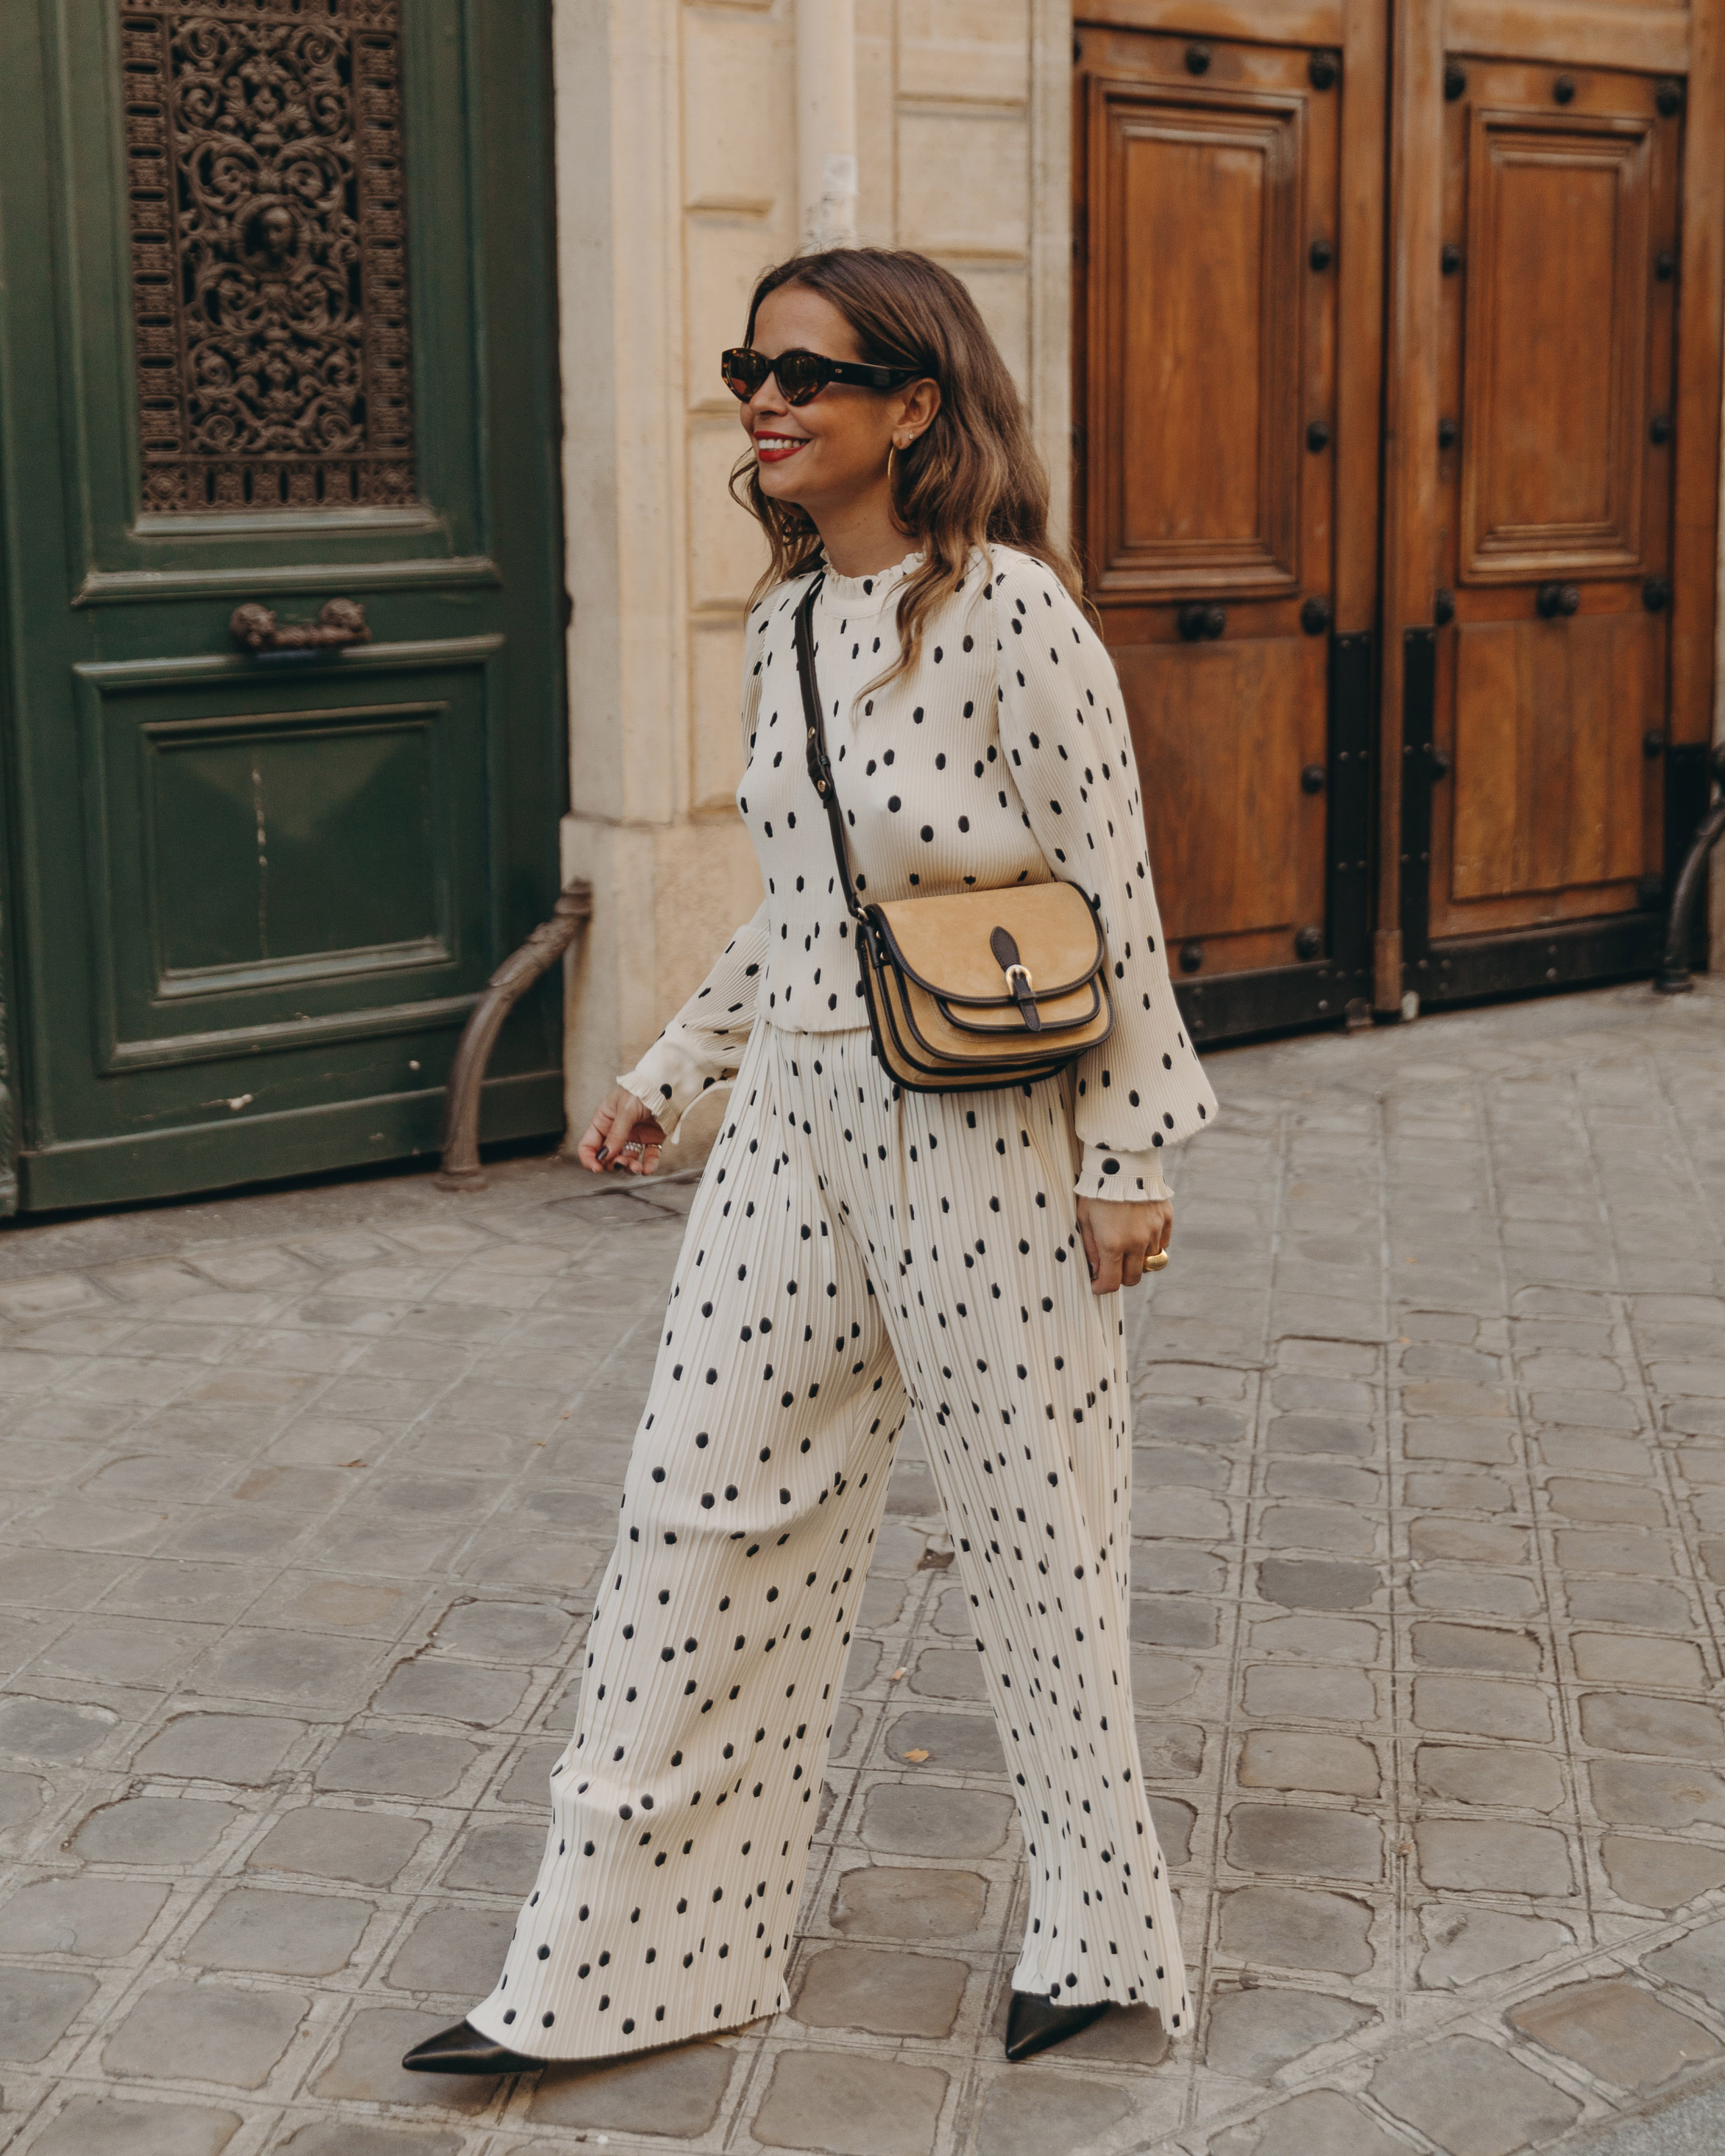 Sara from Collage Vintage at Saint Germain Paris wearing a Sézane polka dots set and a leather crossbody bag.